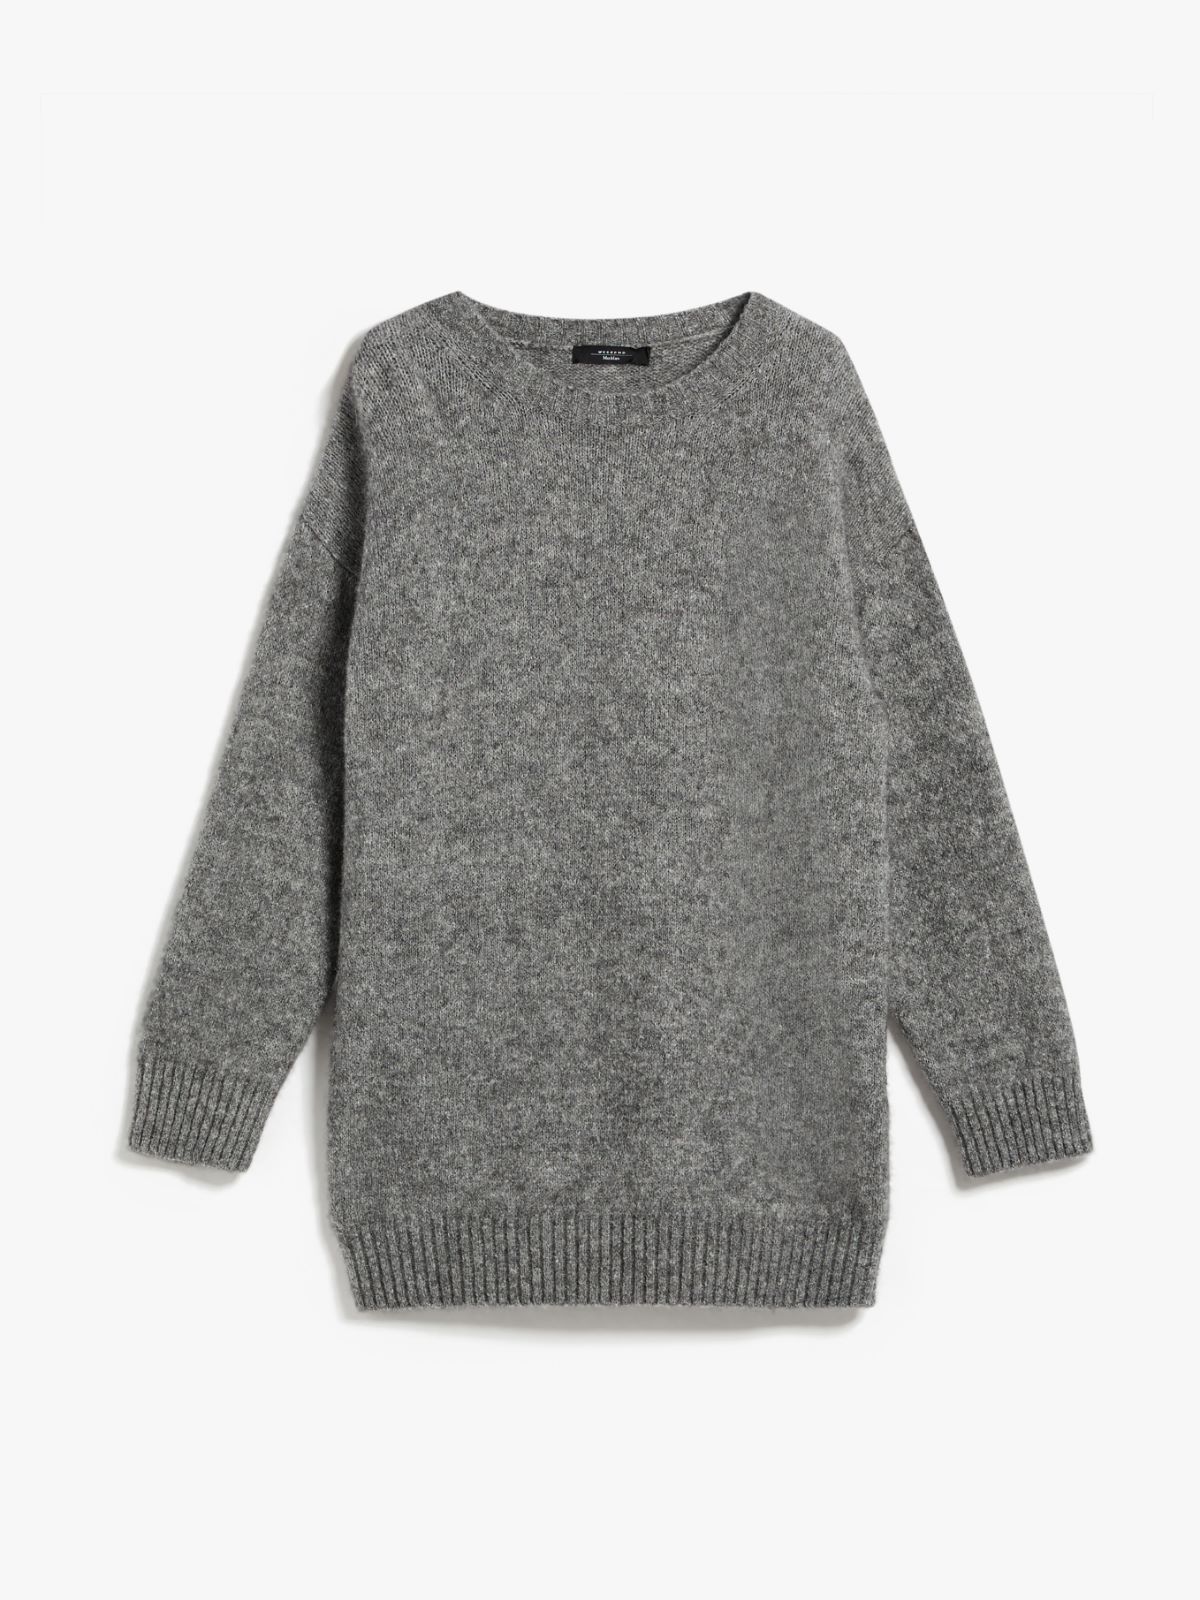 Soft pullover in alpaca and cotton - MEDIUM GREY - Weekend Max Mara - 6